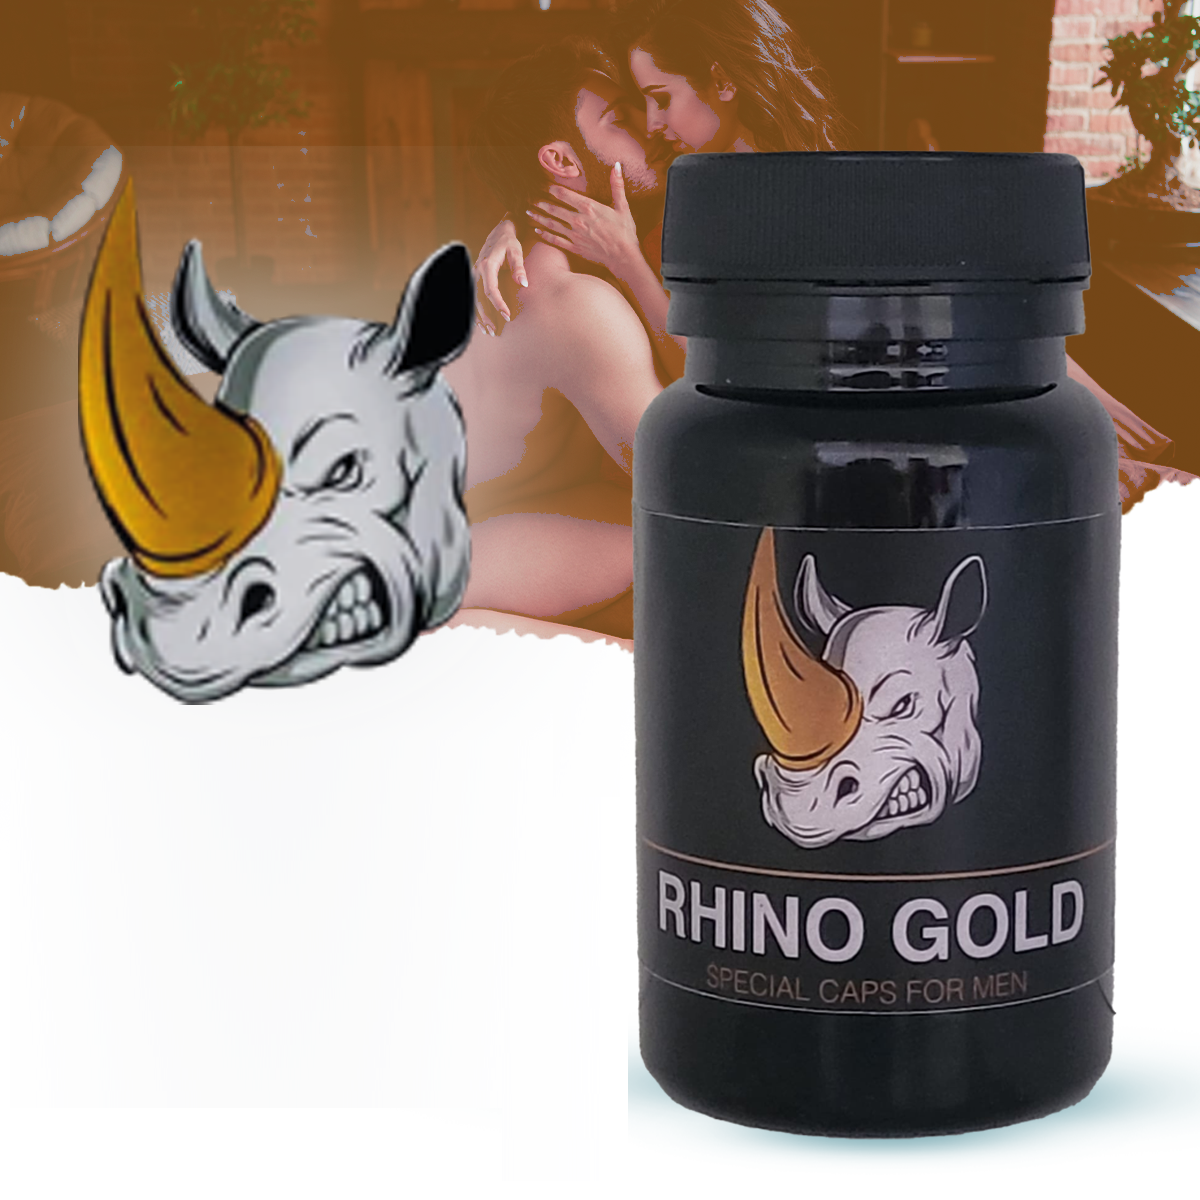 Rhino gold - où trouver - commander - France - site officiel